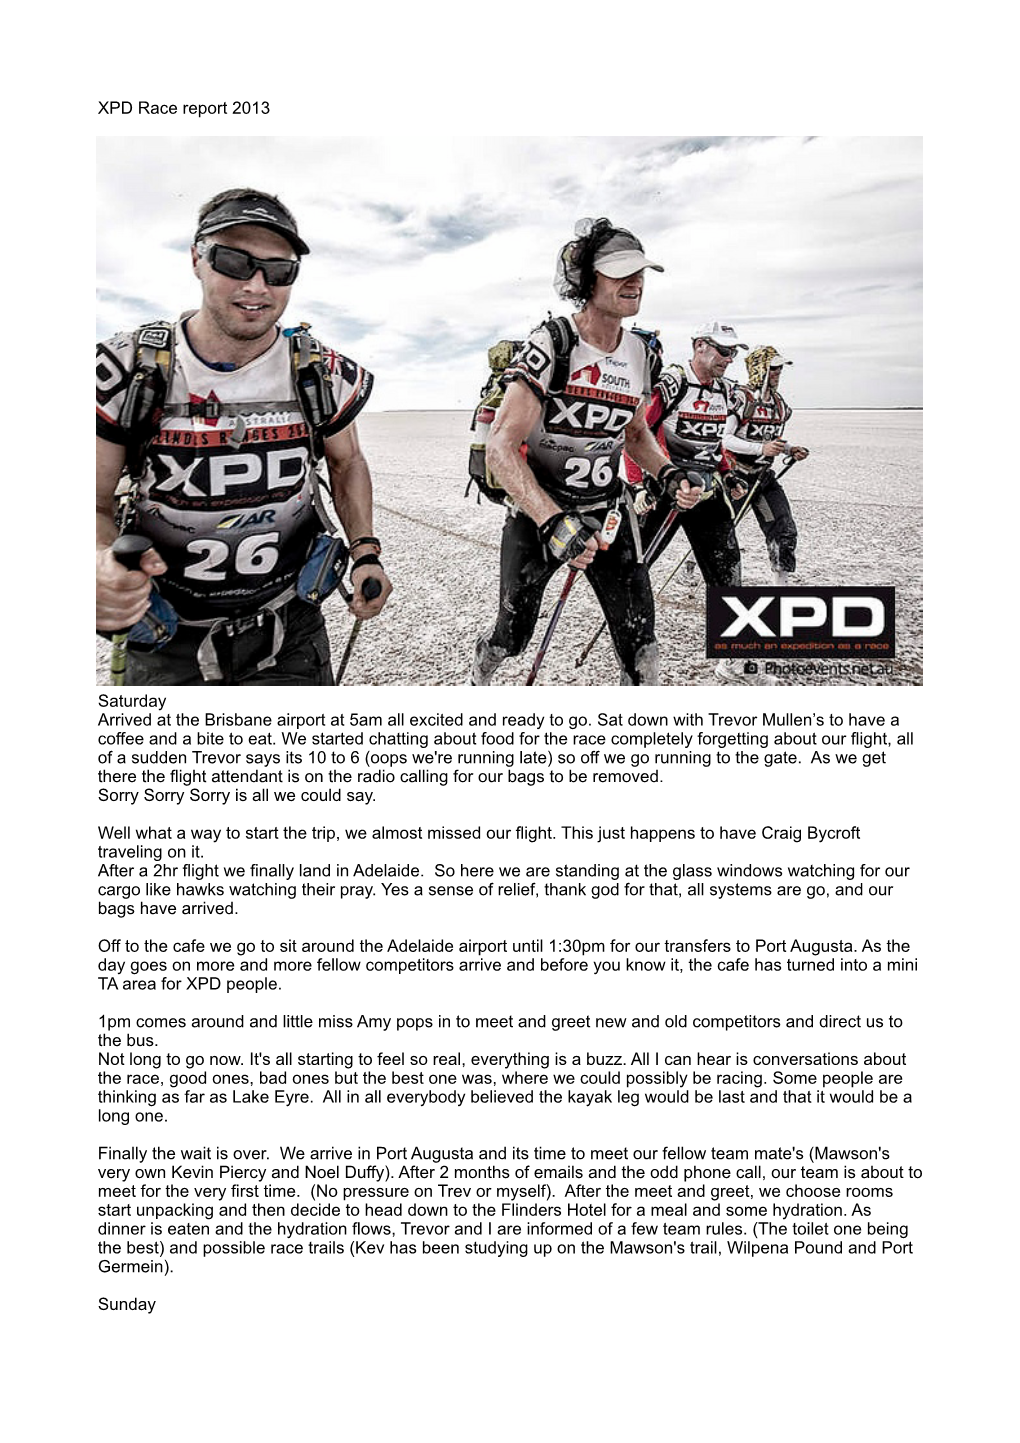 XPD Race Report 2013